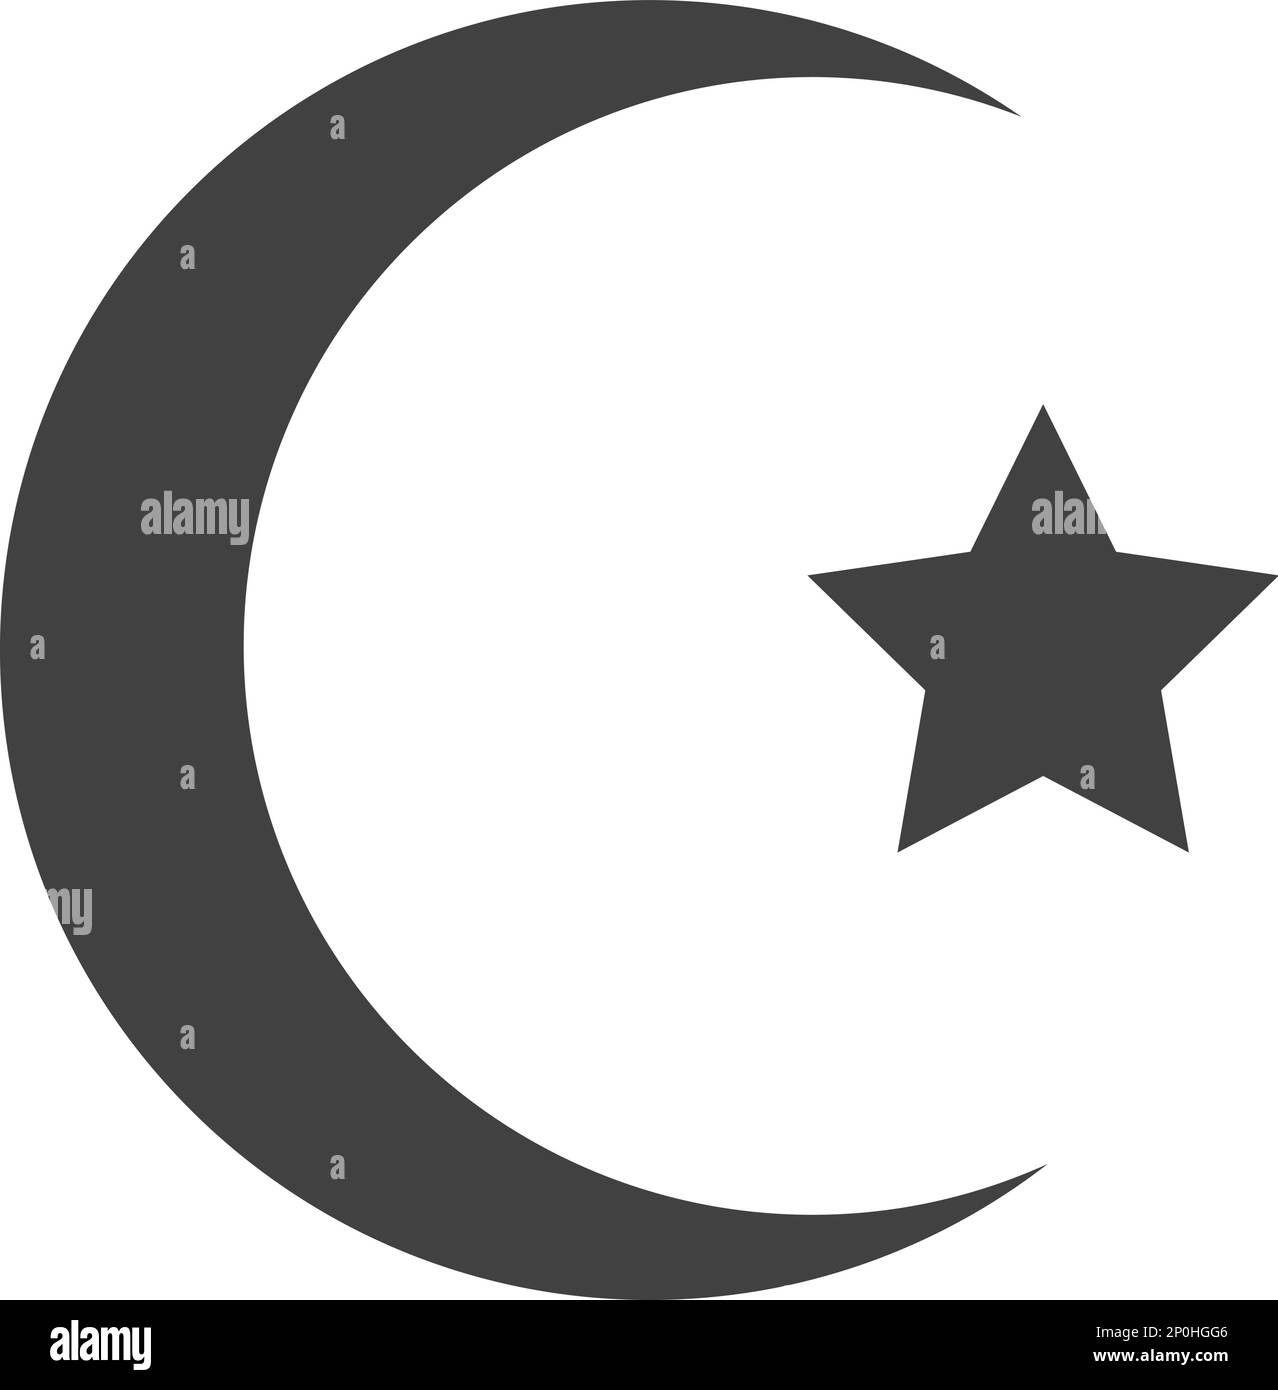 Islam Vector Religious Sign - Moon and star Islamic symbol Stock Vector